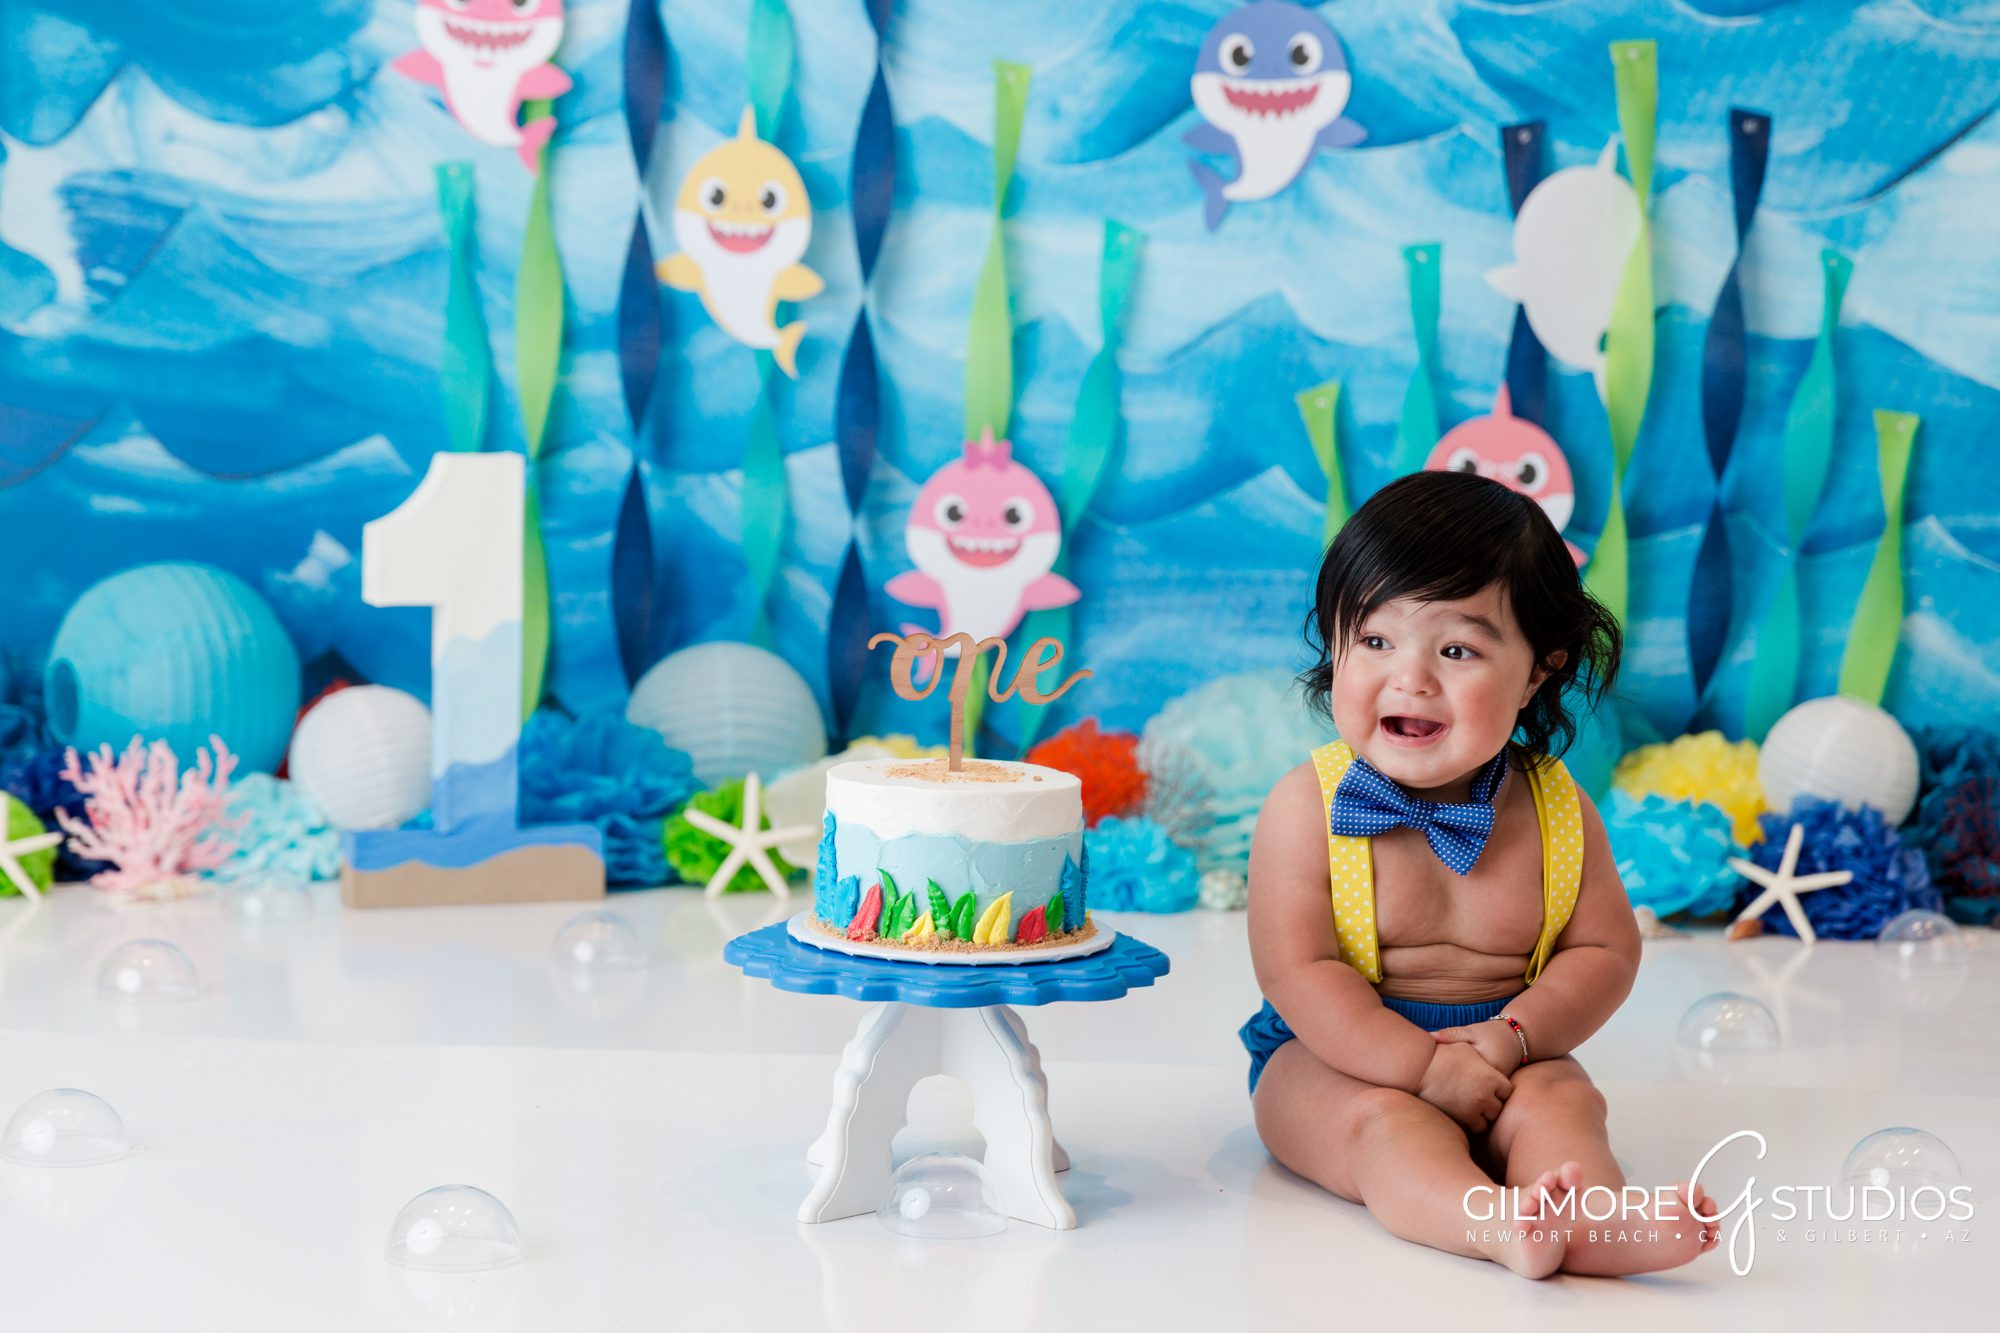 Baby Shark Cake Smash Theme, birthday cake, custom cakes, set design, boy's birthday party, gilmore studios, gilbert AZ children's portrait studio